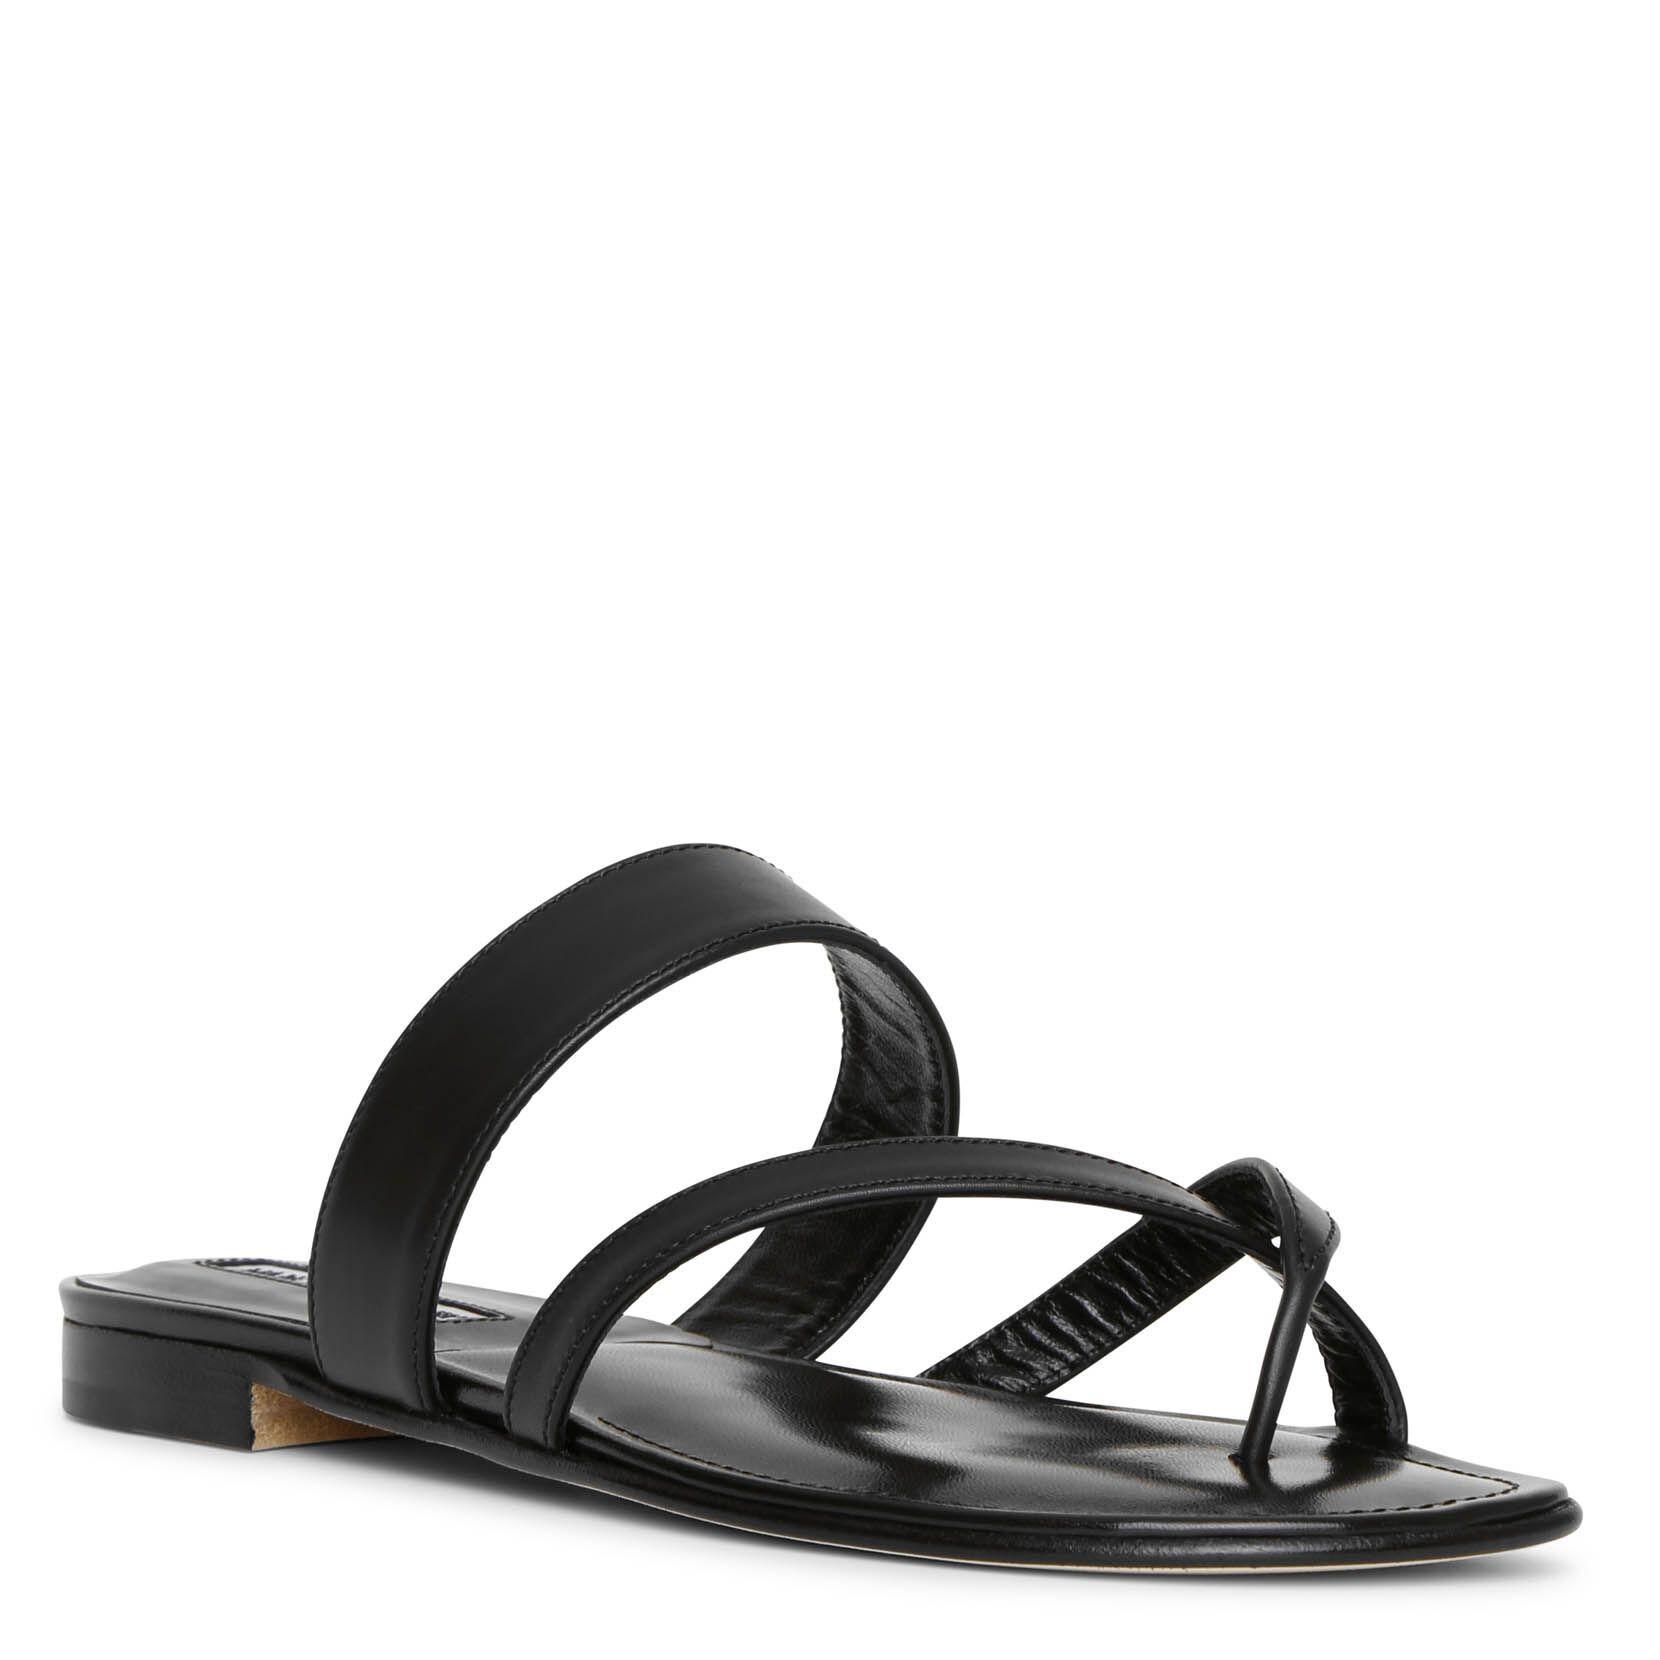 Manolo Blahnik Susa Flat Leather Sandals in Black - Save 1% - Lyst